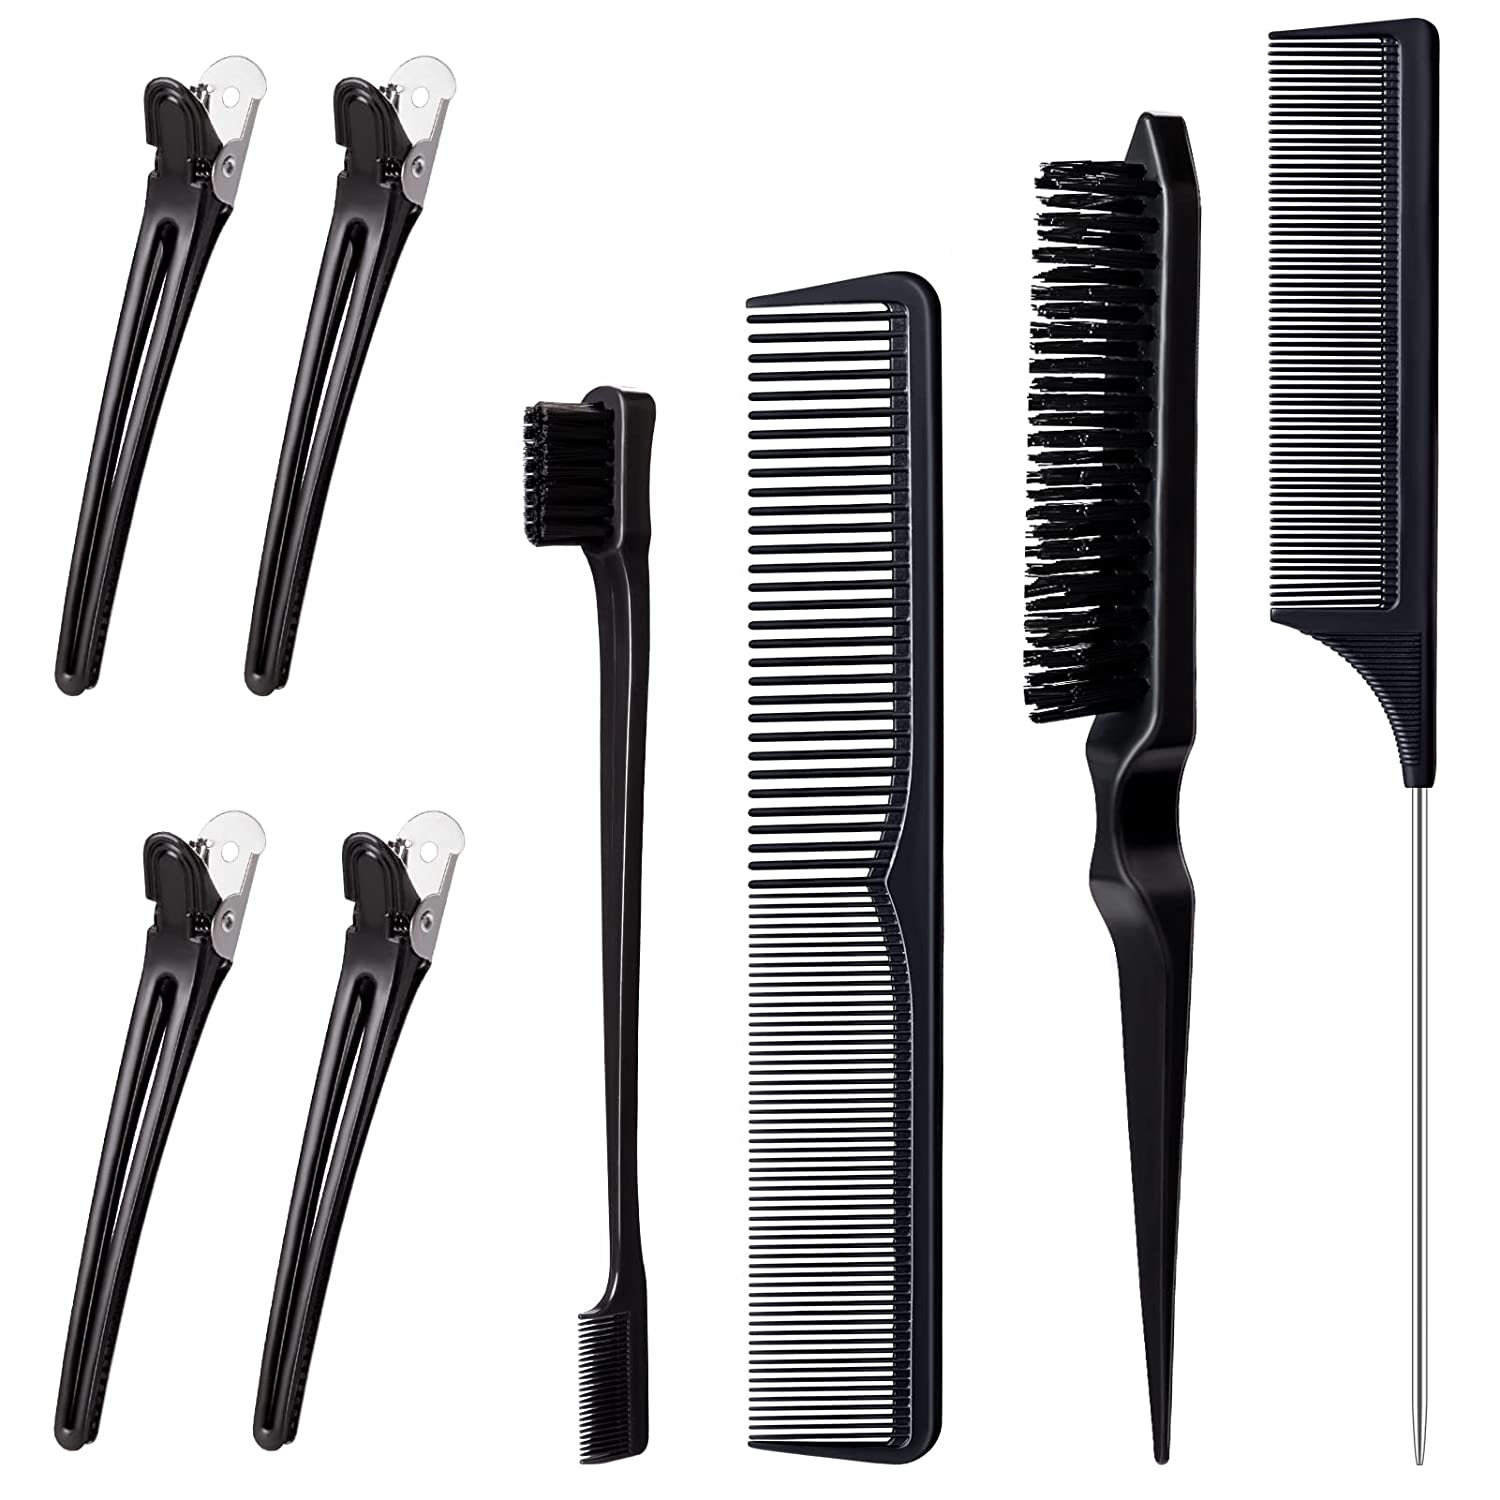 MELLIEX Sleek Bun Brush Set, Touching Brush, Handle Comb, Hairdresser, Carbon Comb, Edge Control, Hair Brush, Hair Clips for Hair Styling, Hairdressing Salon and Personal Use